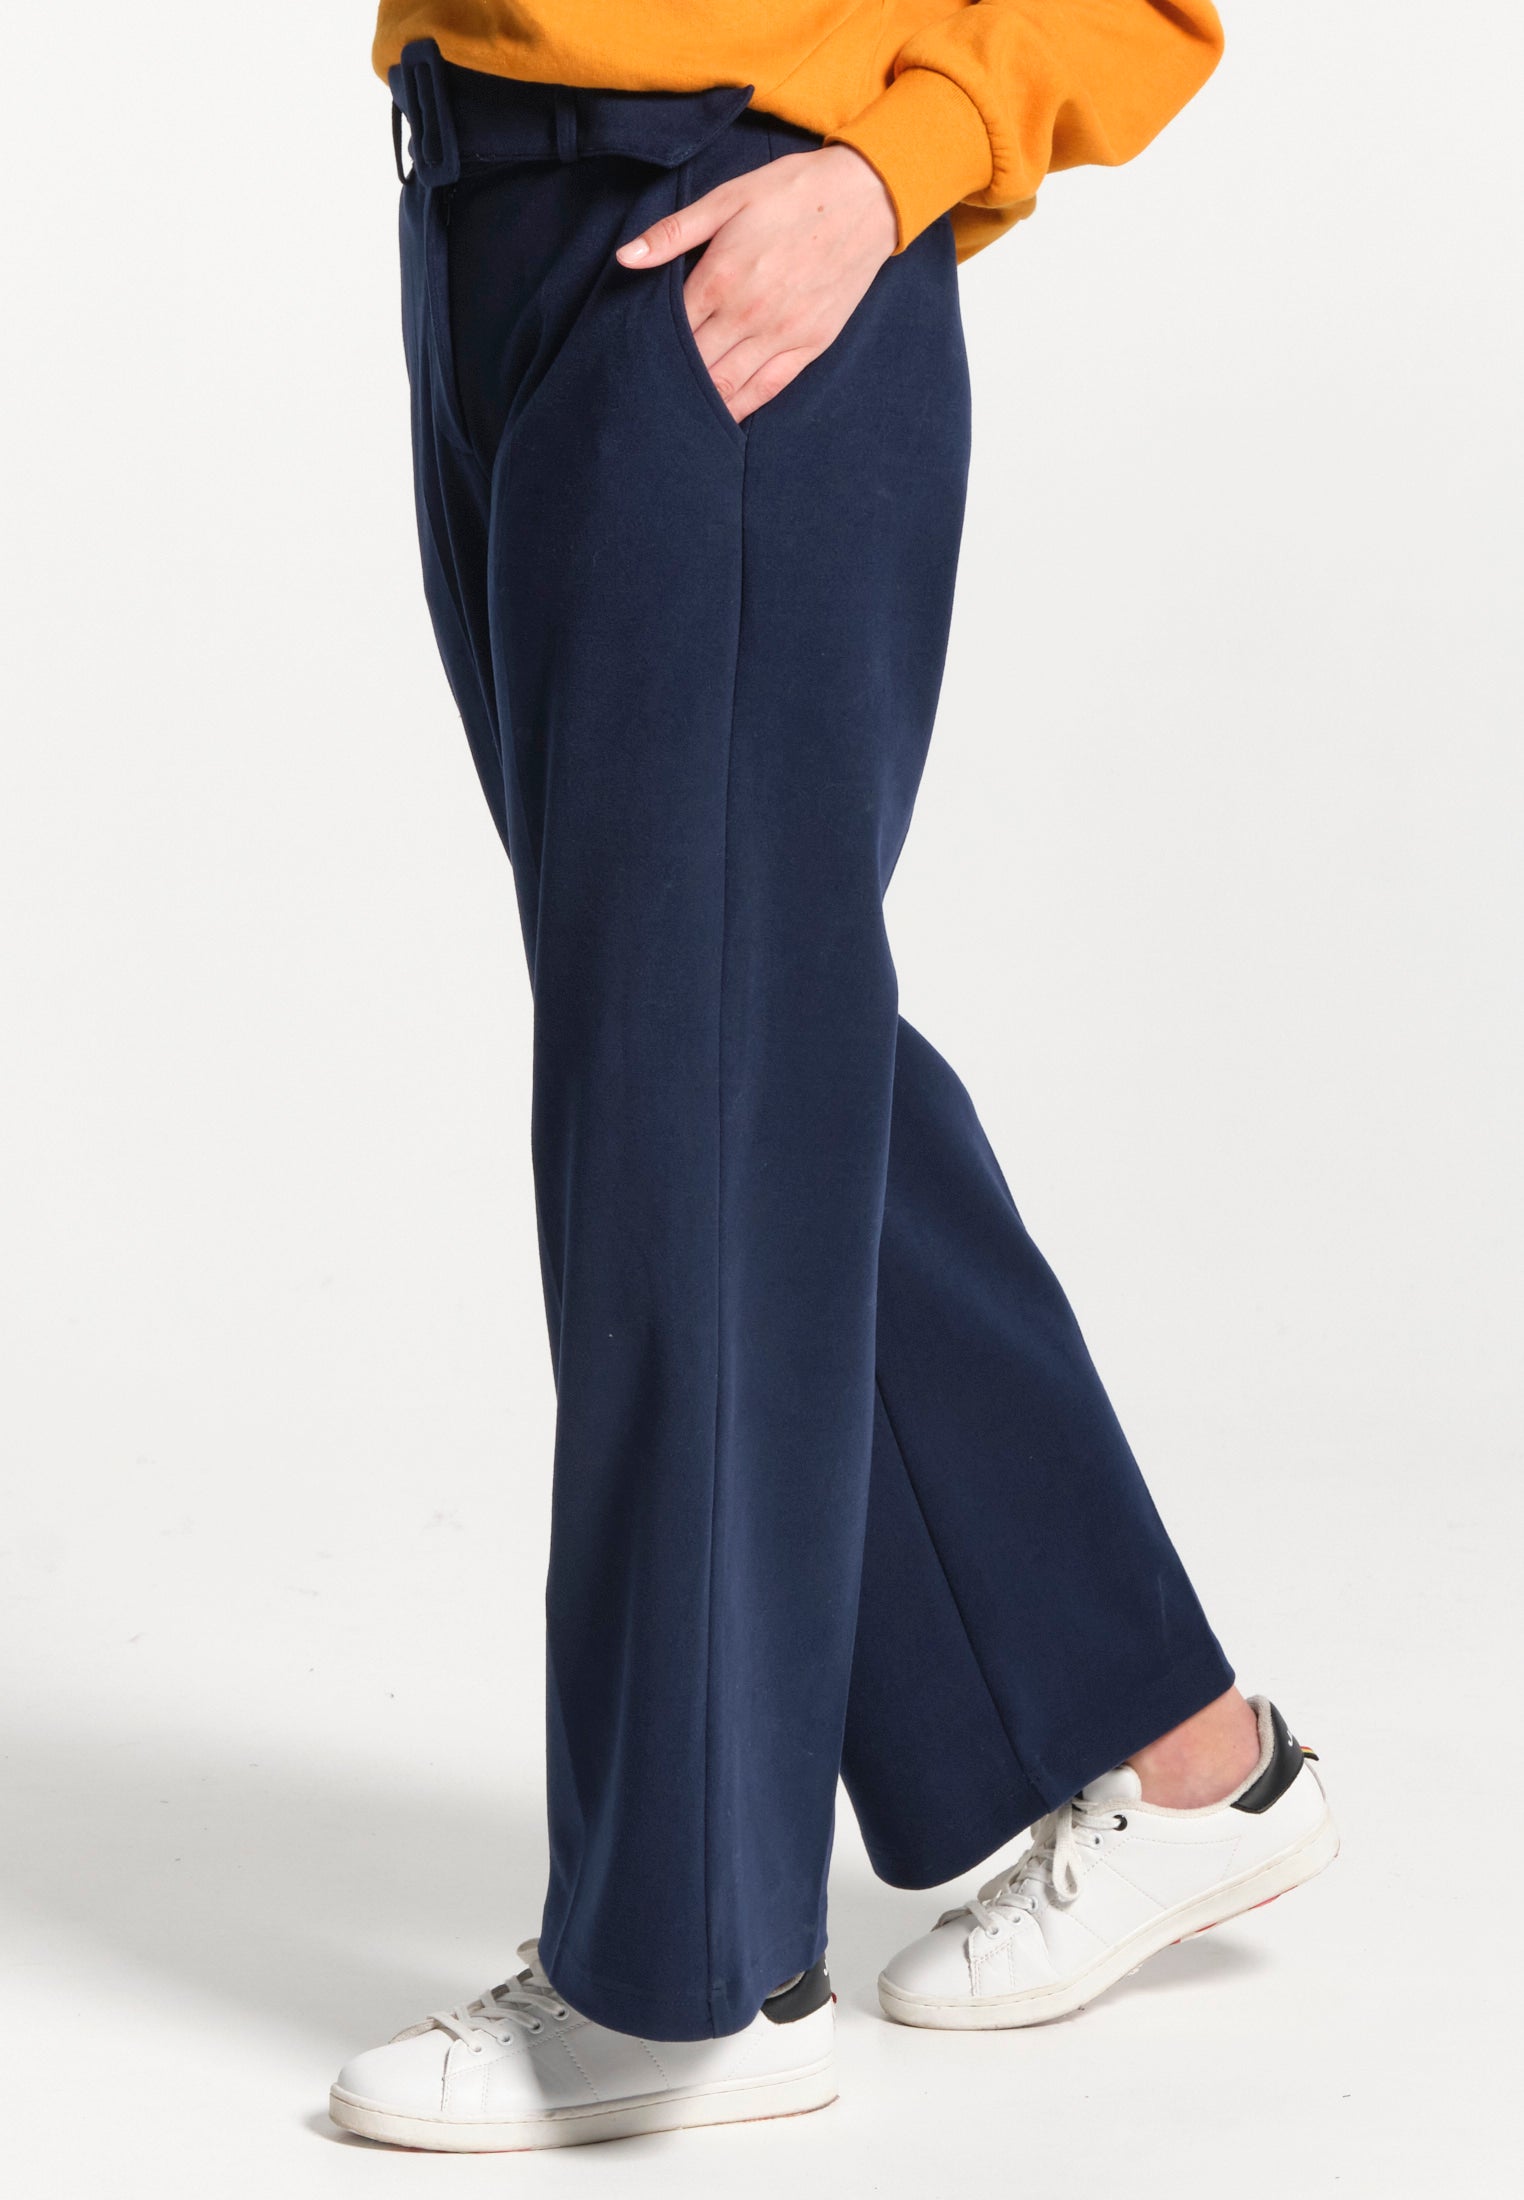 Pantalon femme bleu marine slim coupe confort - 20785